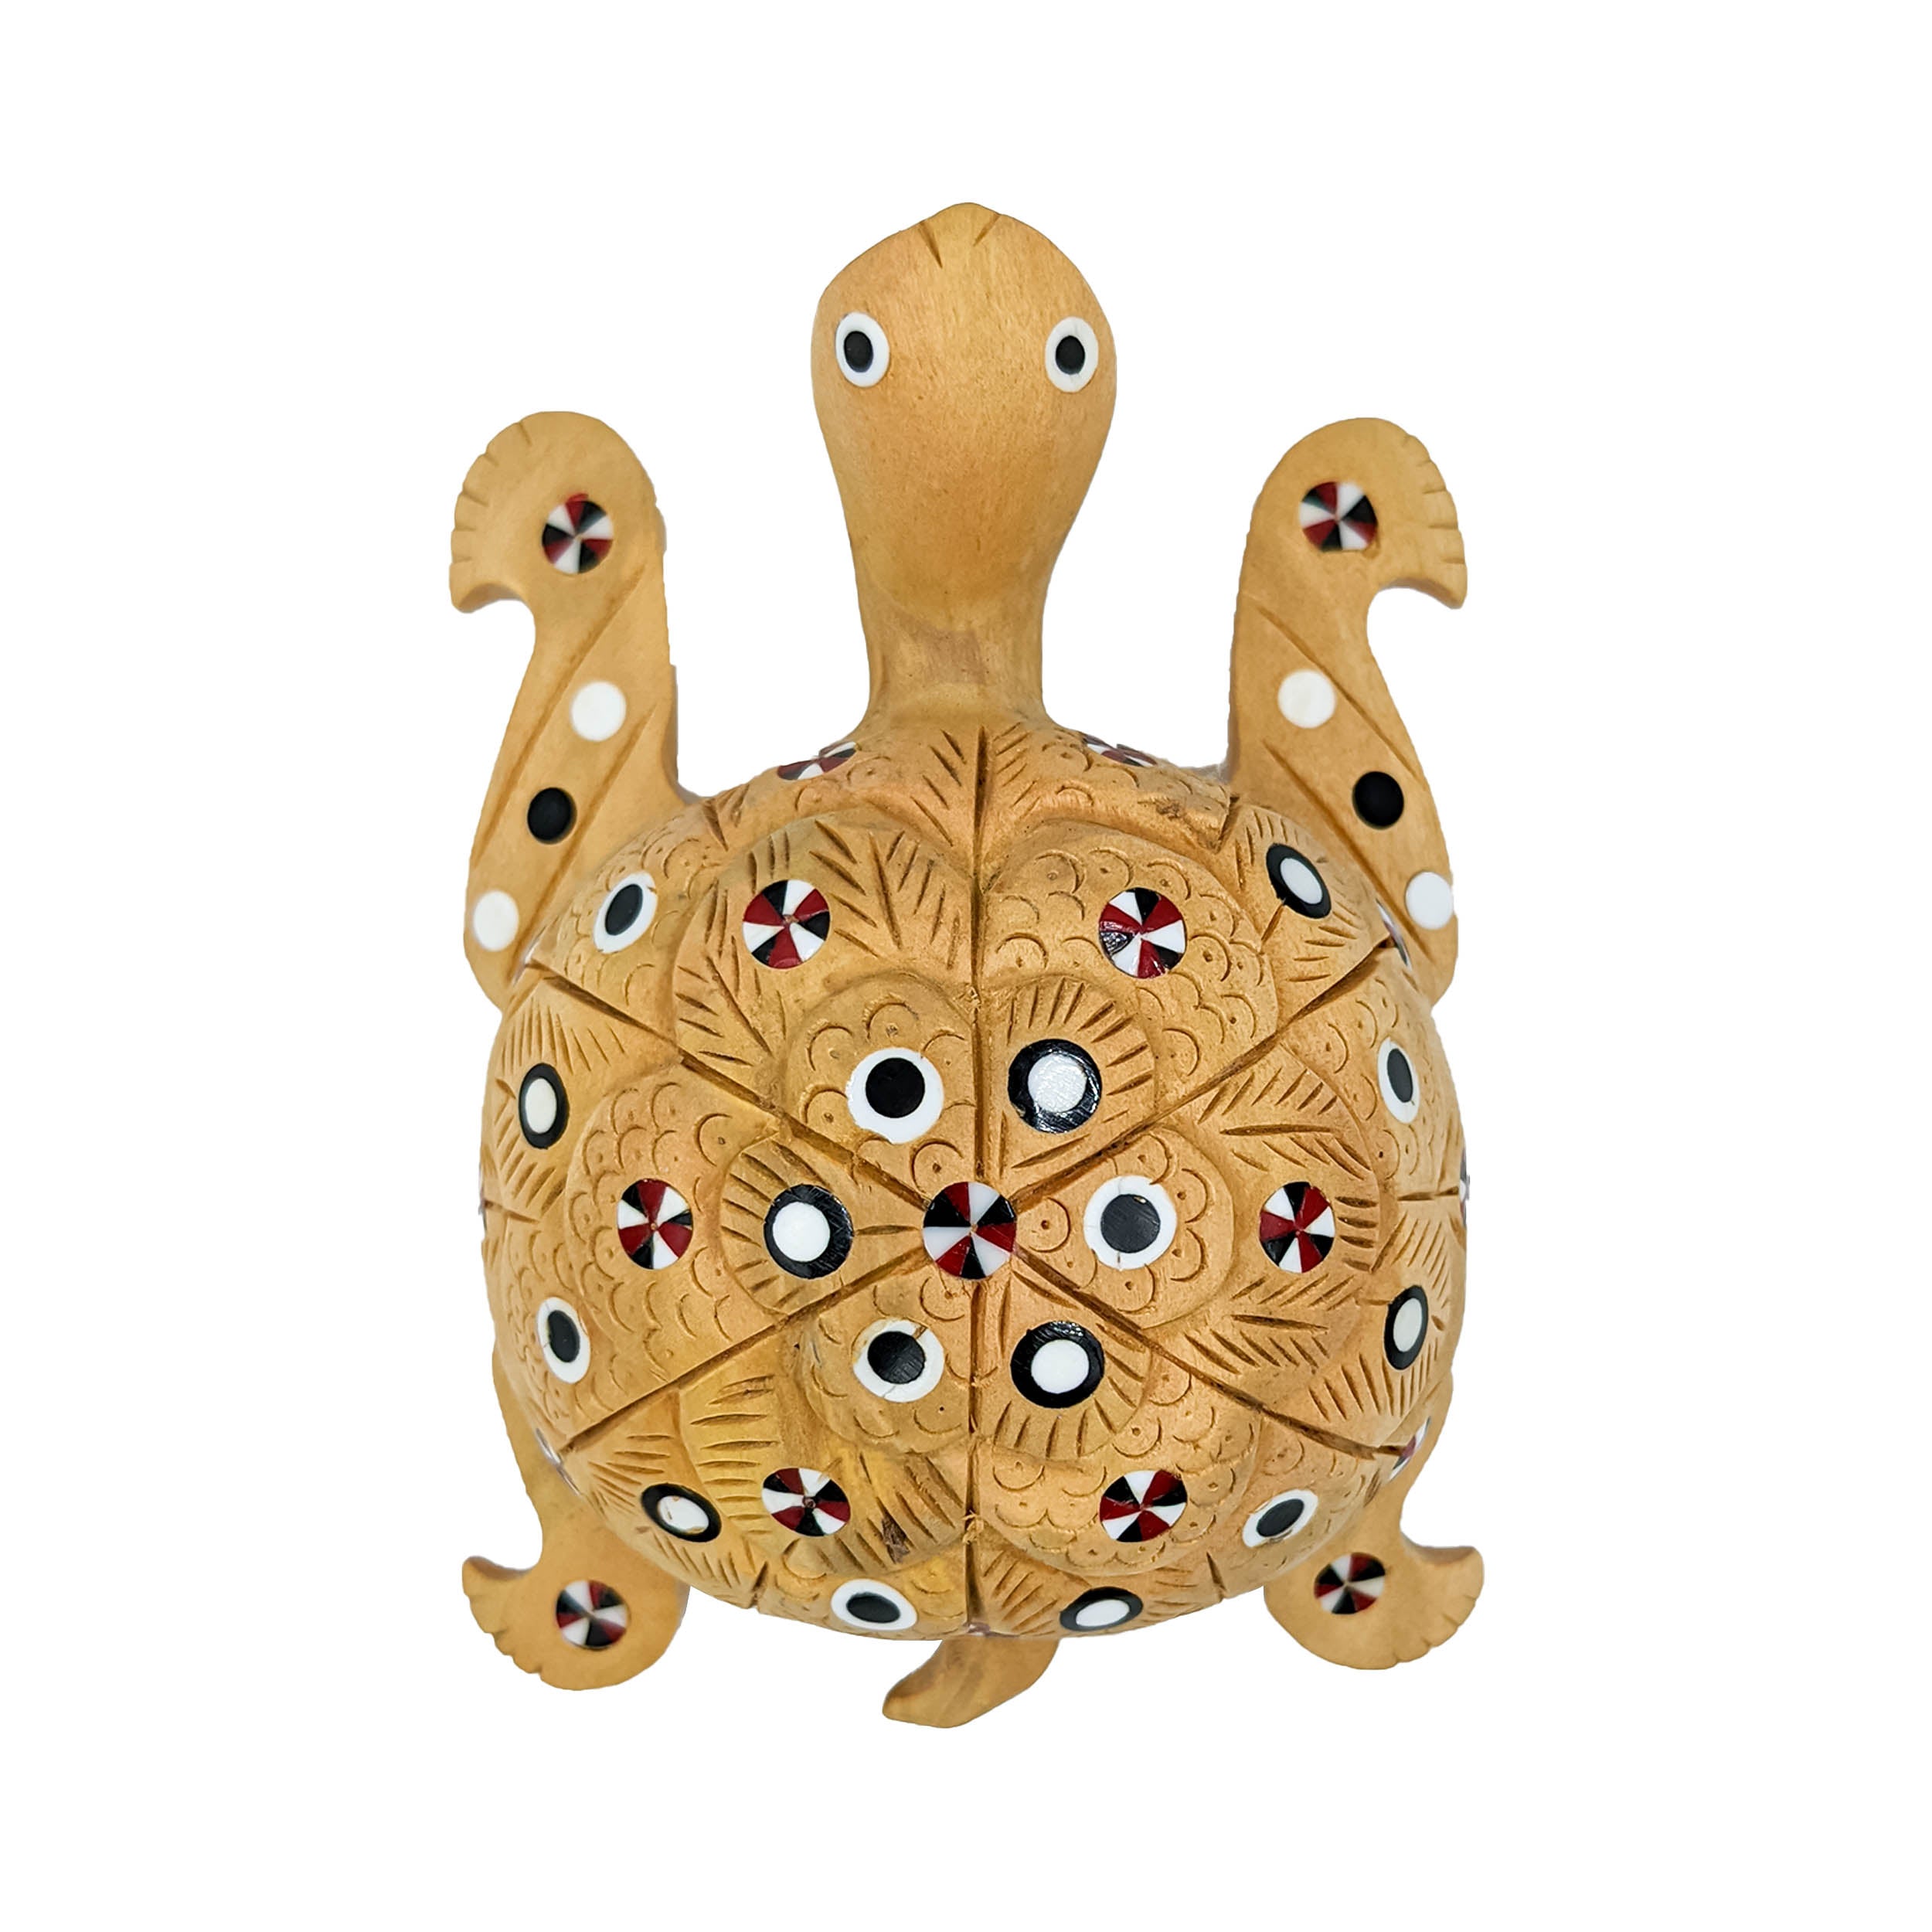 Wooden Handmade Painted Tortoise